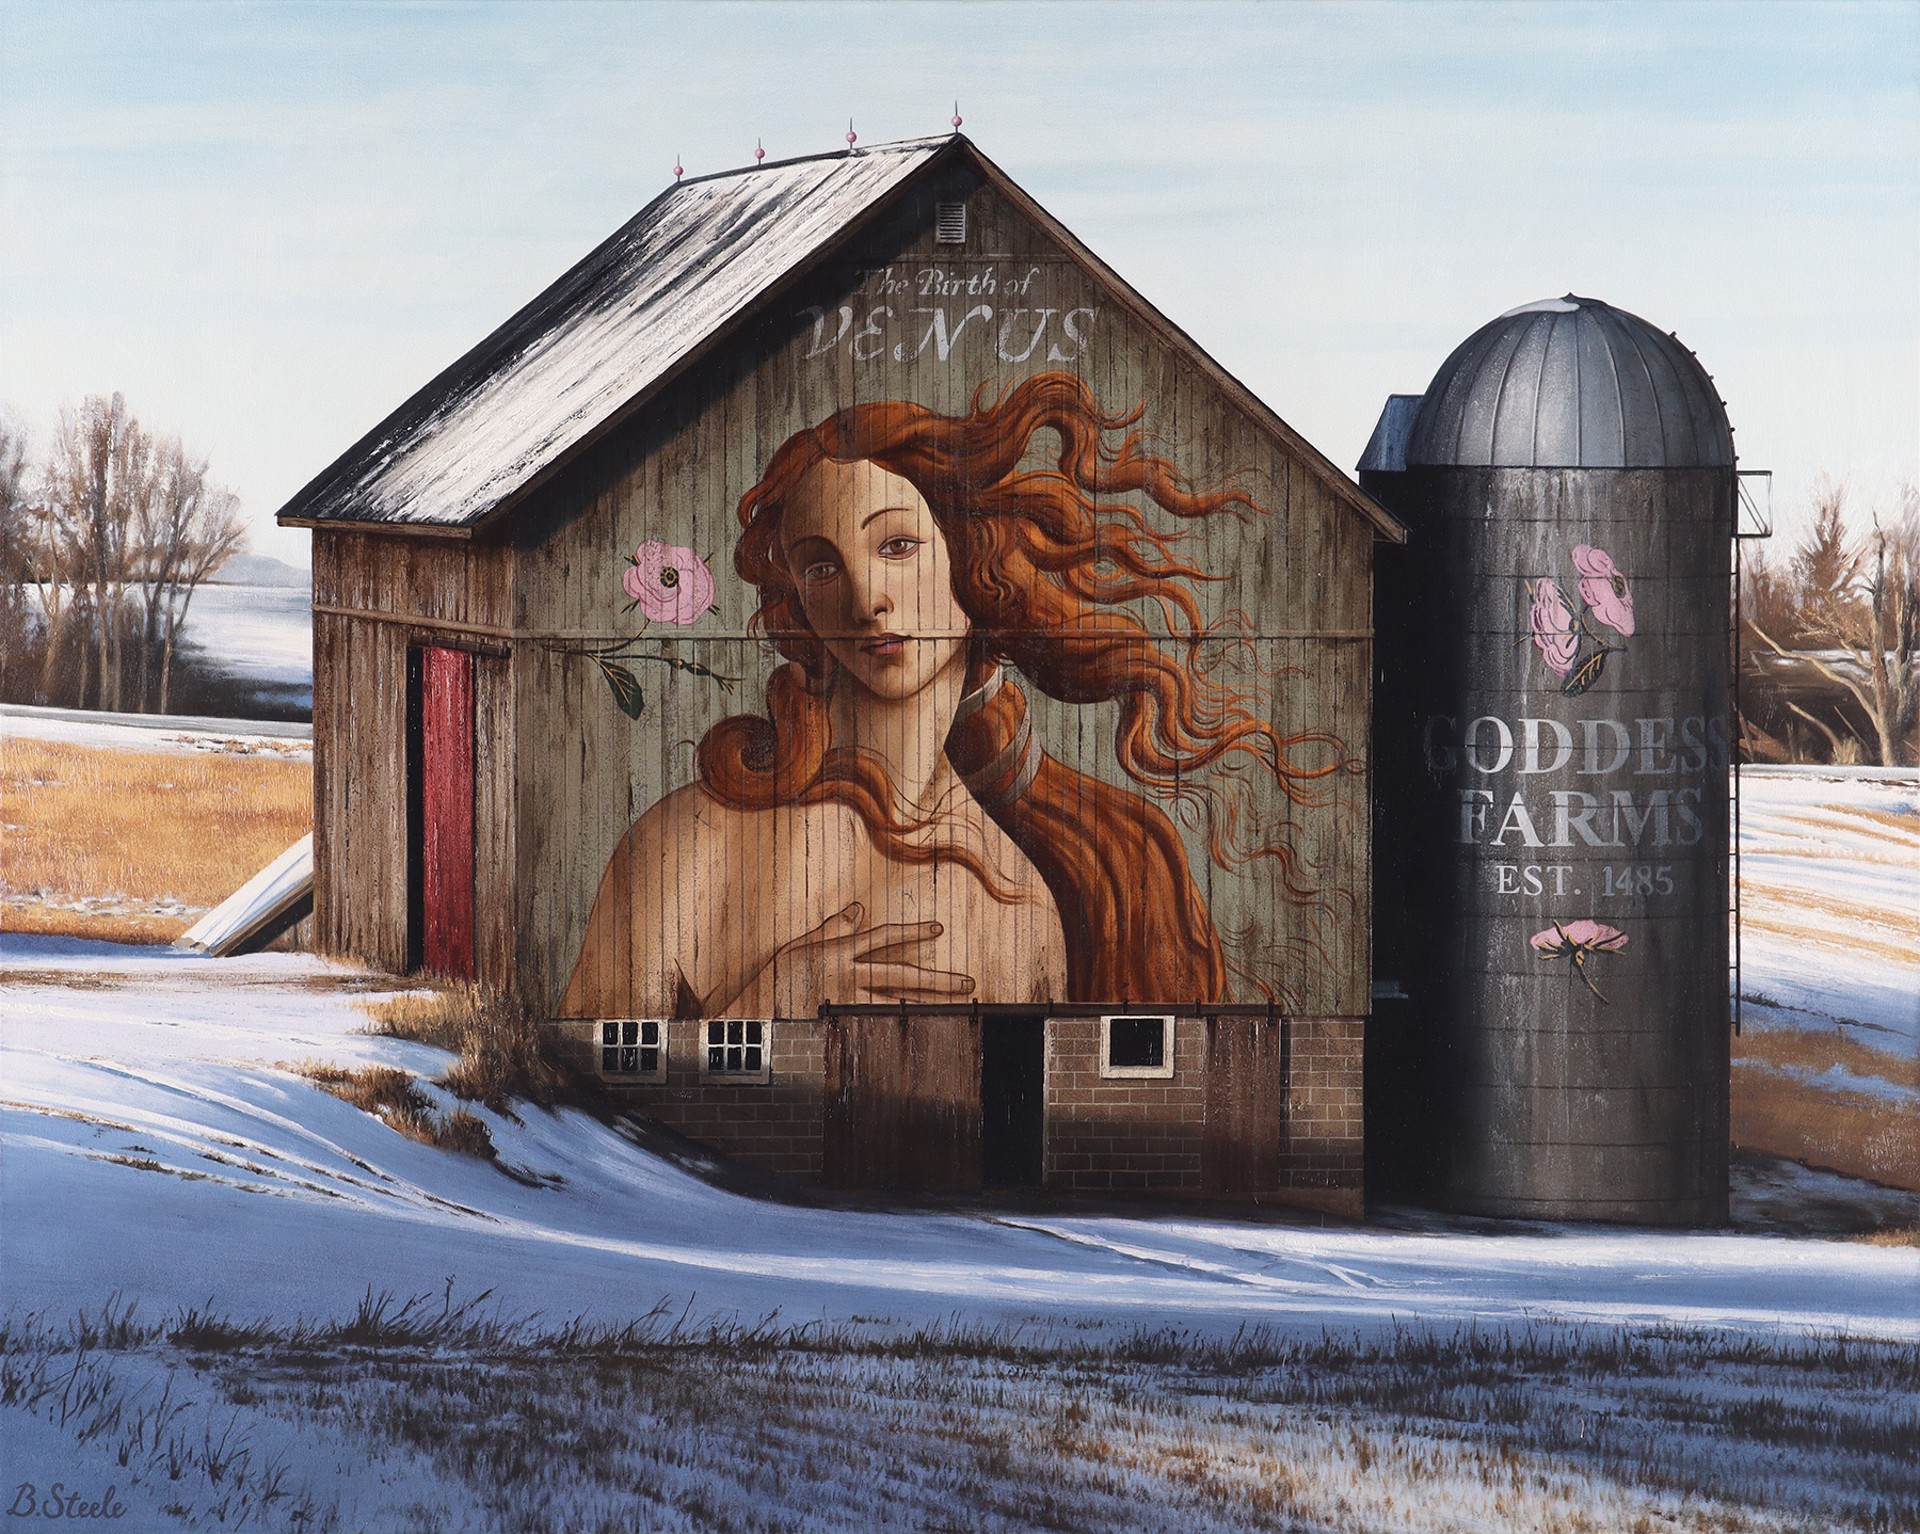 Goddess Farms by BEN STEELE